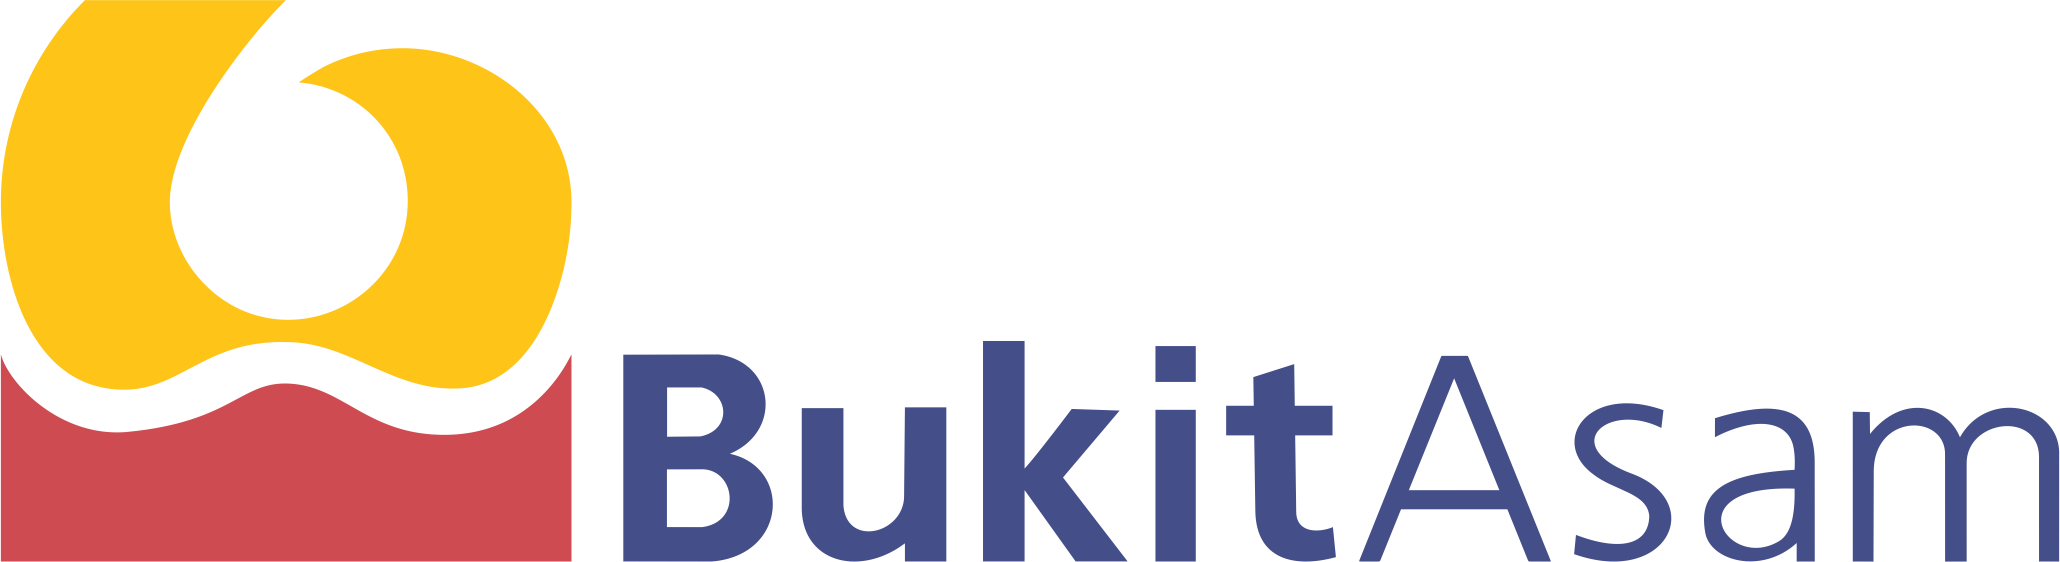 253-2531175_paper-presentation-logo-bukit-asam-png